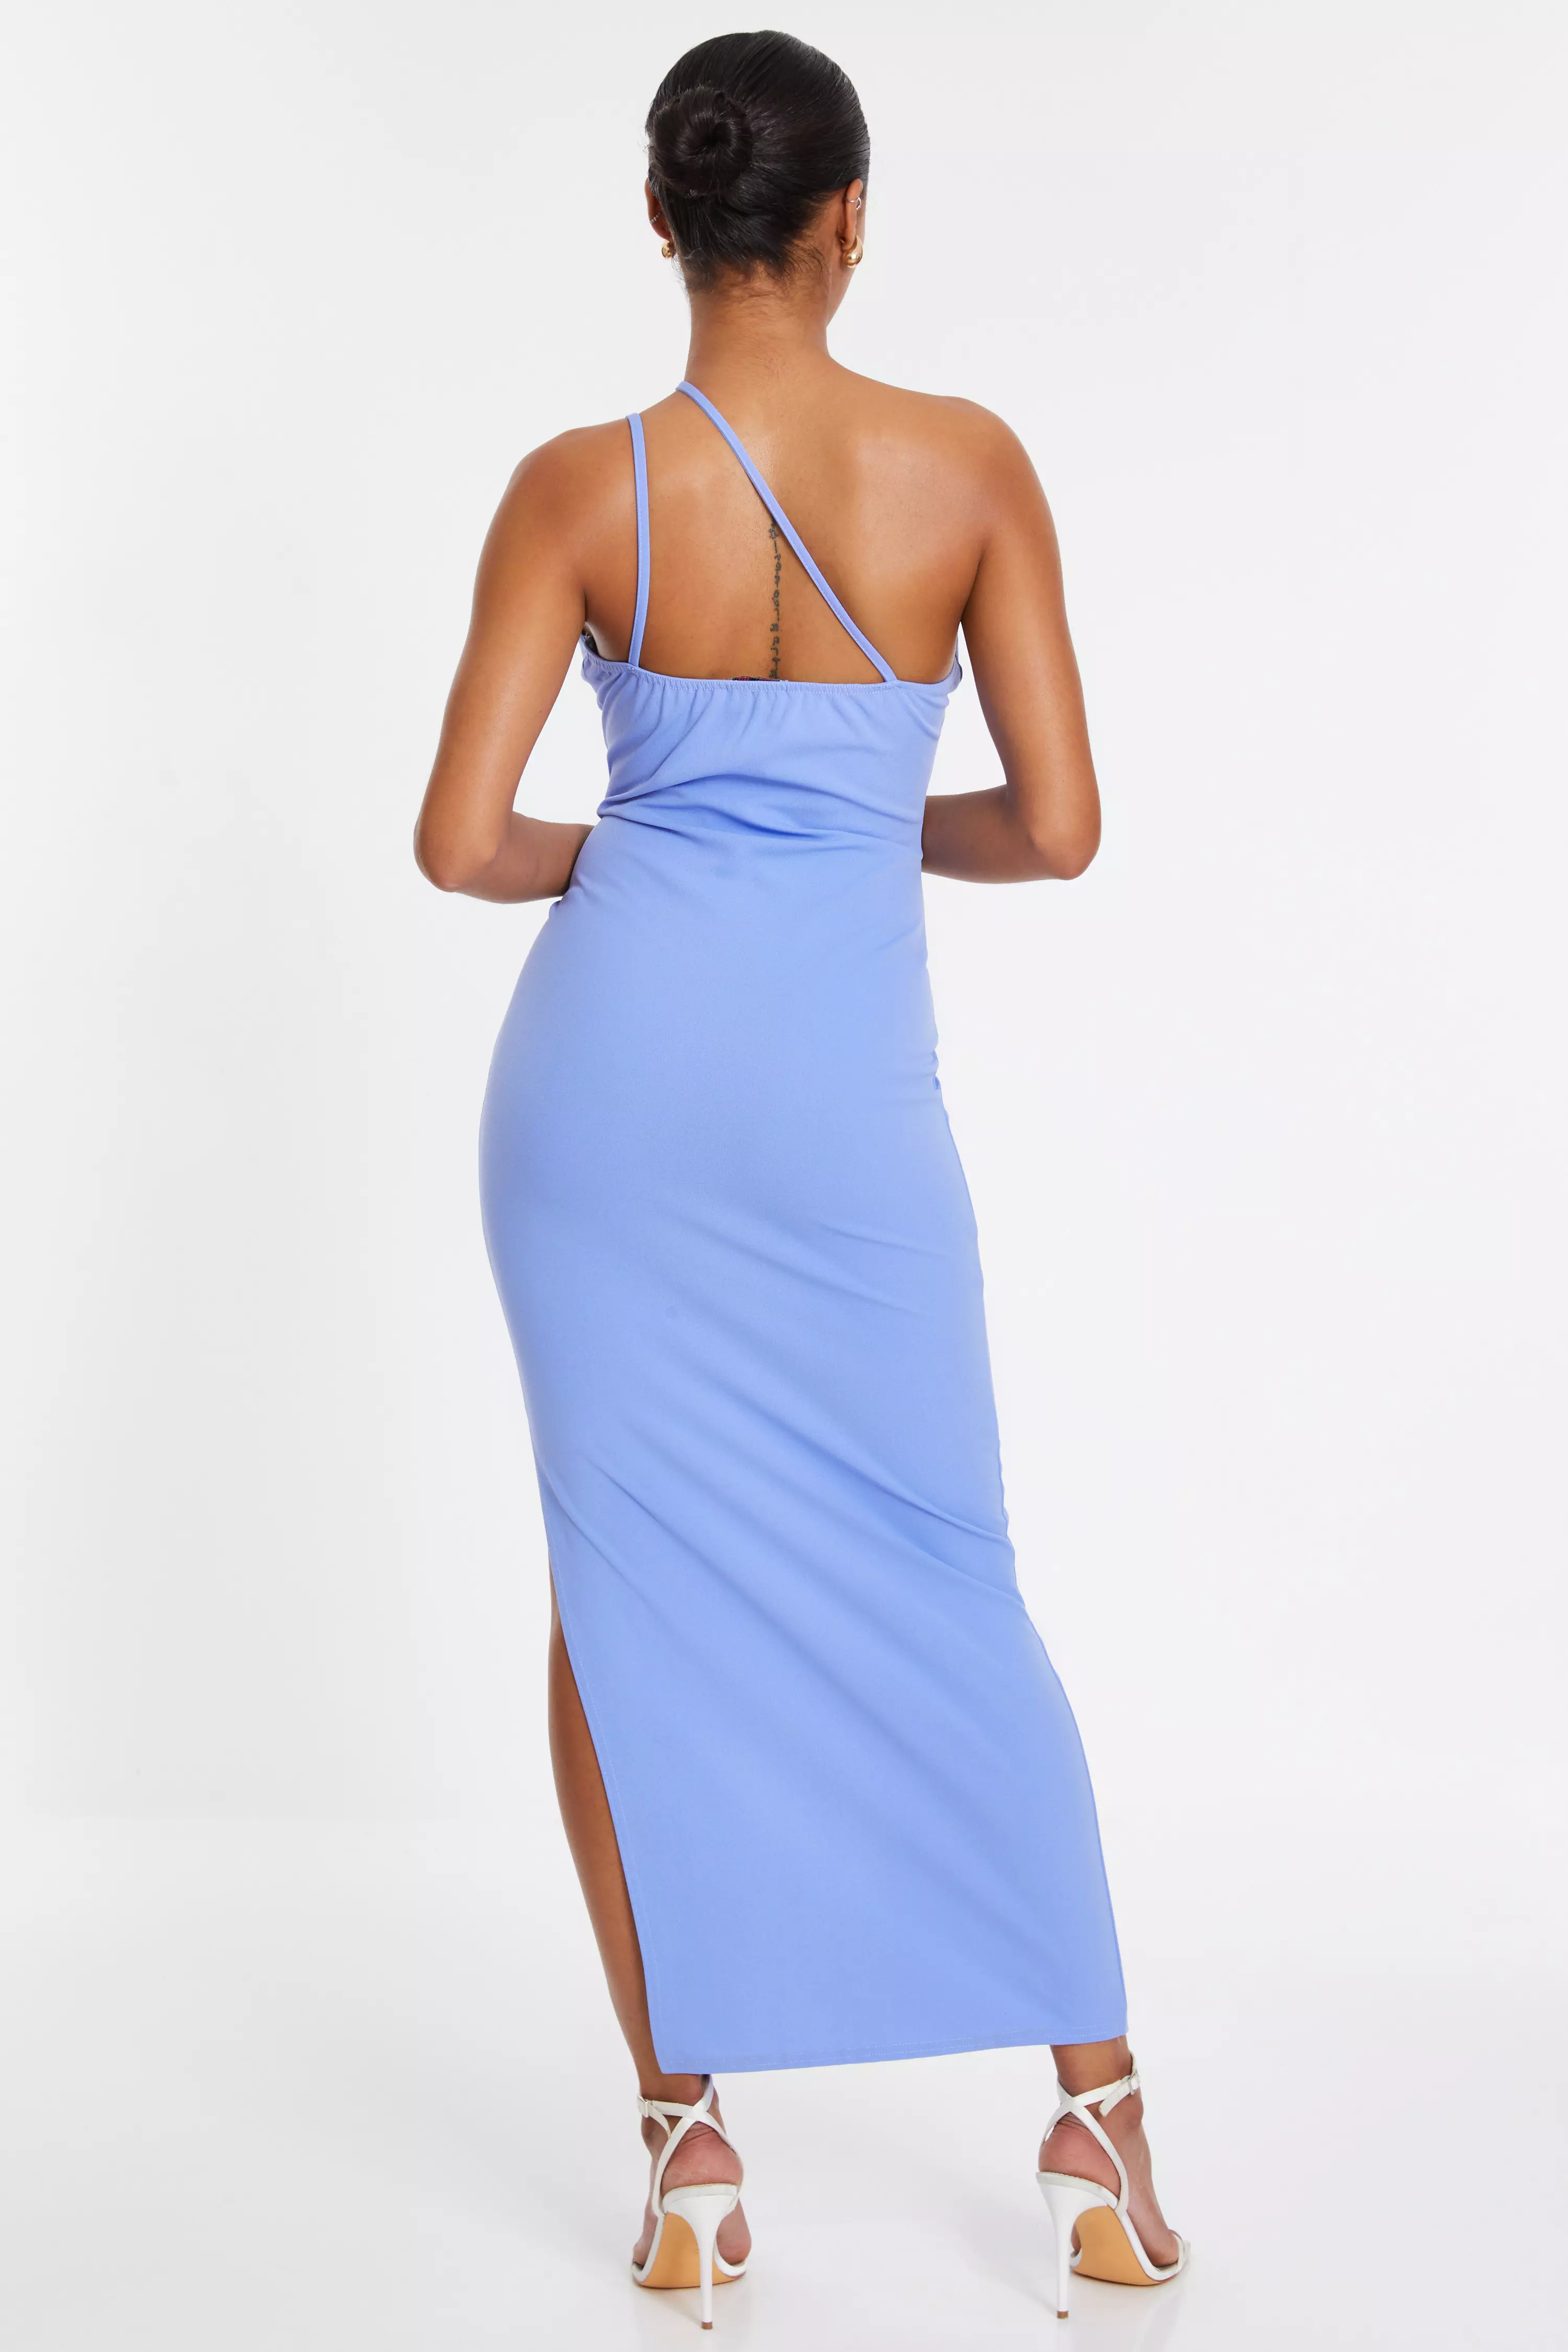 Blue Cut Out One Shoulder Midaxi Dress